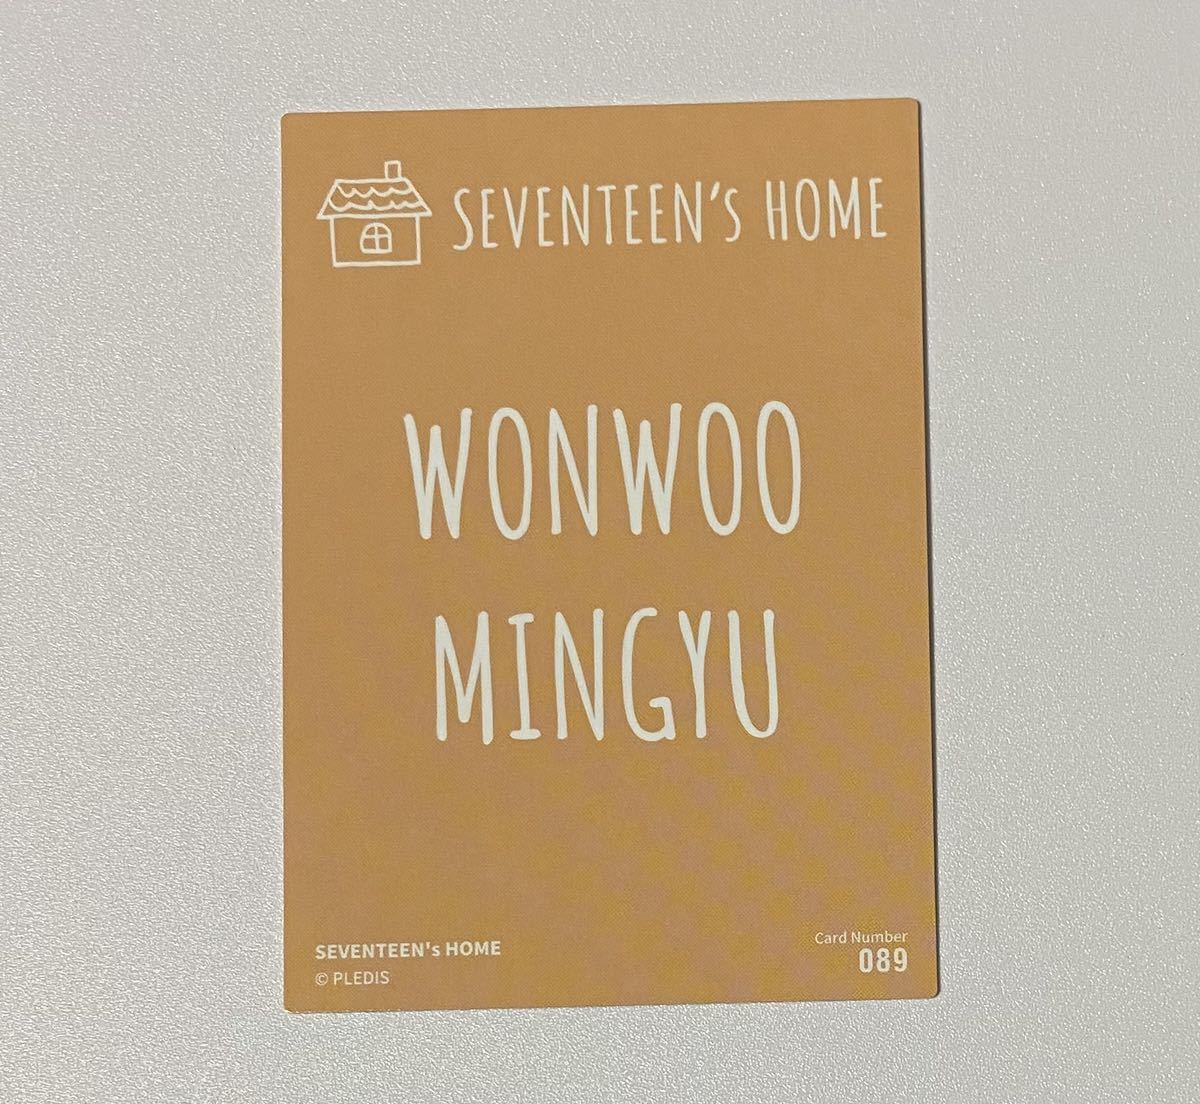 SEVENTEENmingyuwonSEVENTEEN*s HOME пара коллекционные карточки 089 MINGYU WONWOO Photocard